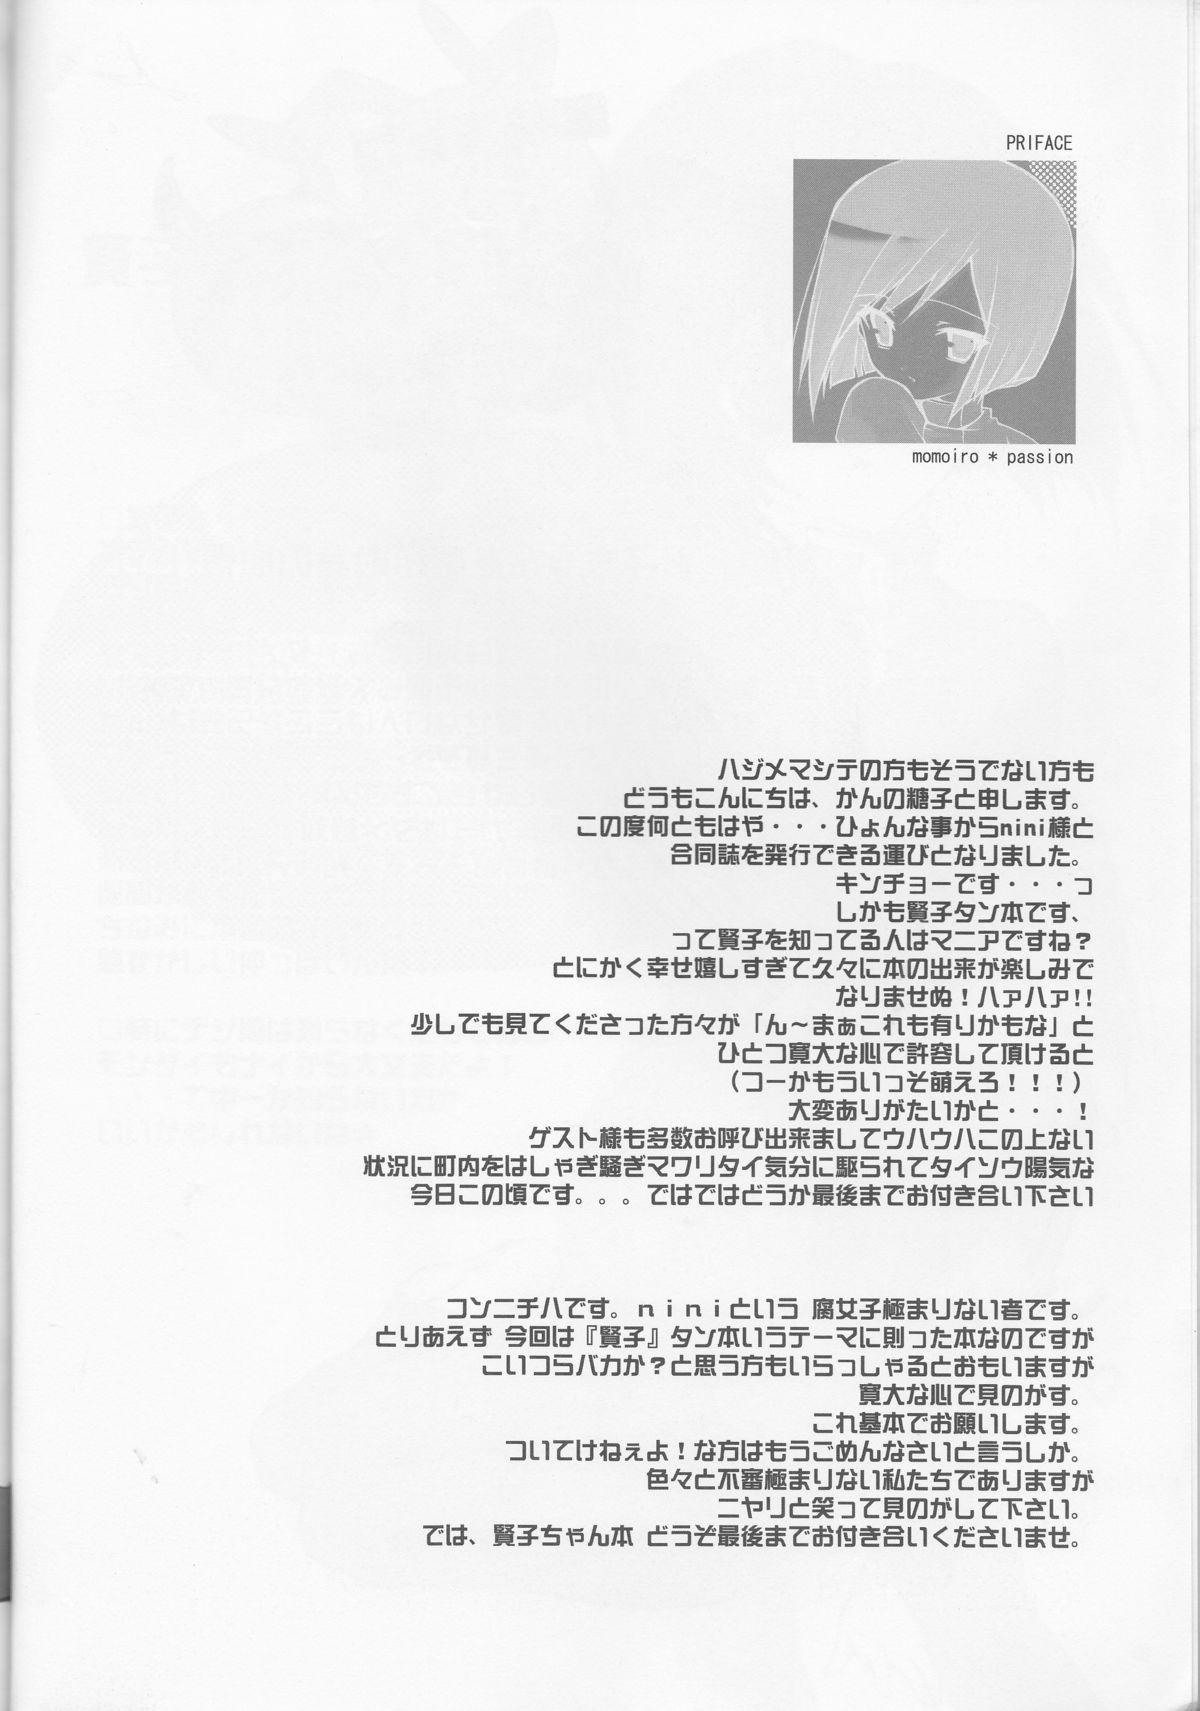 Groupfuck MOMOIRO PASSION - Digimon adventure Tight Pussy Fuck - Page 6